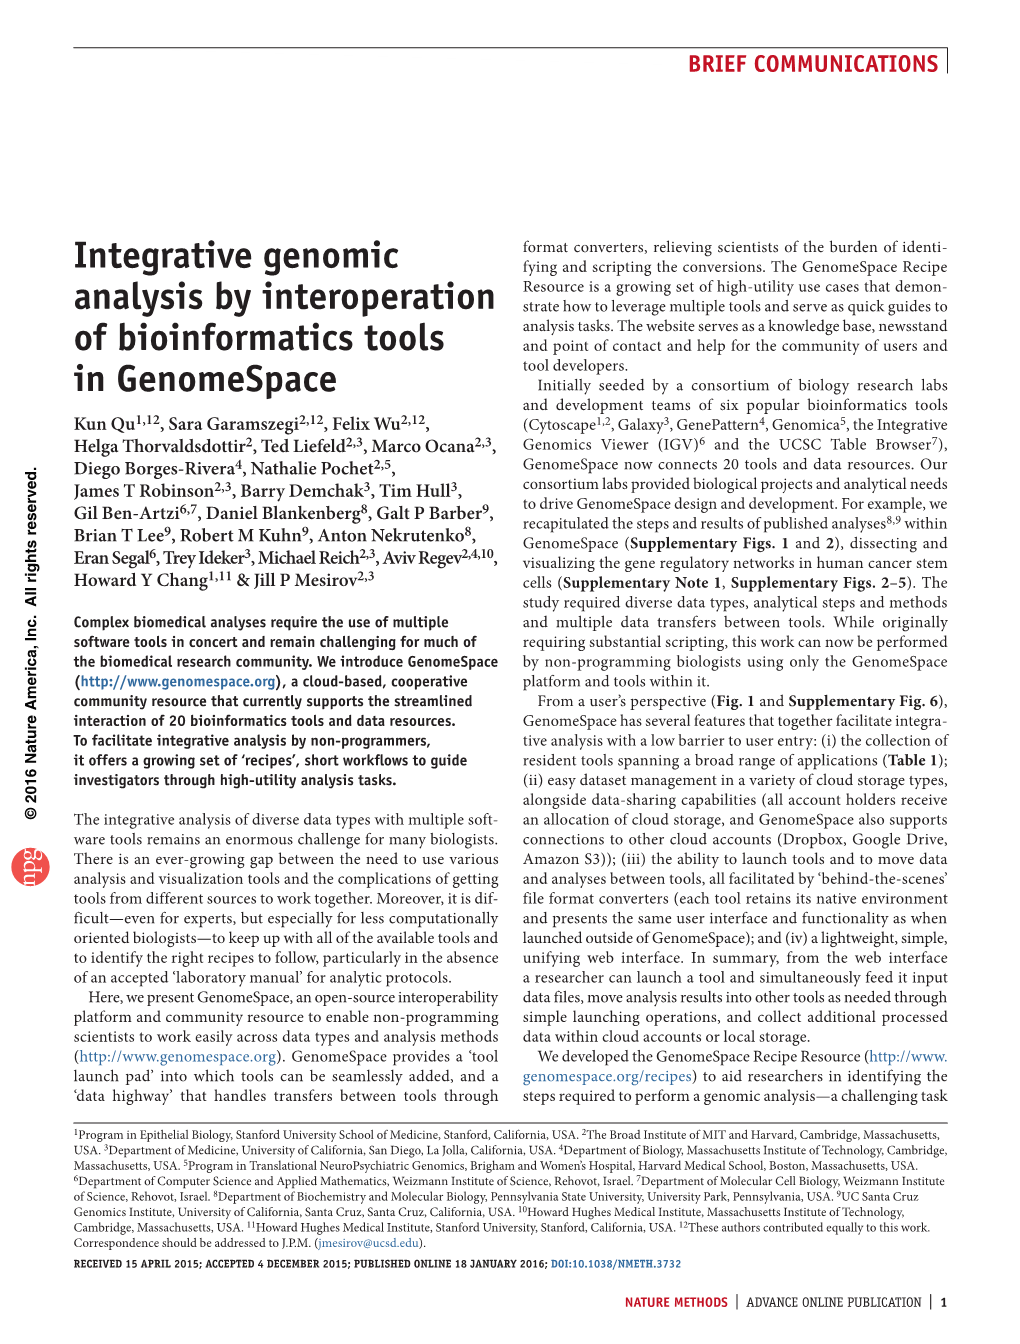 Integrative Genomic Analysis by Interoperation Of